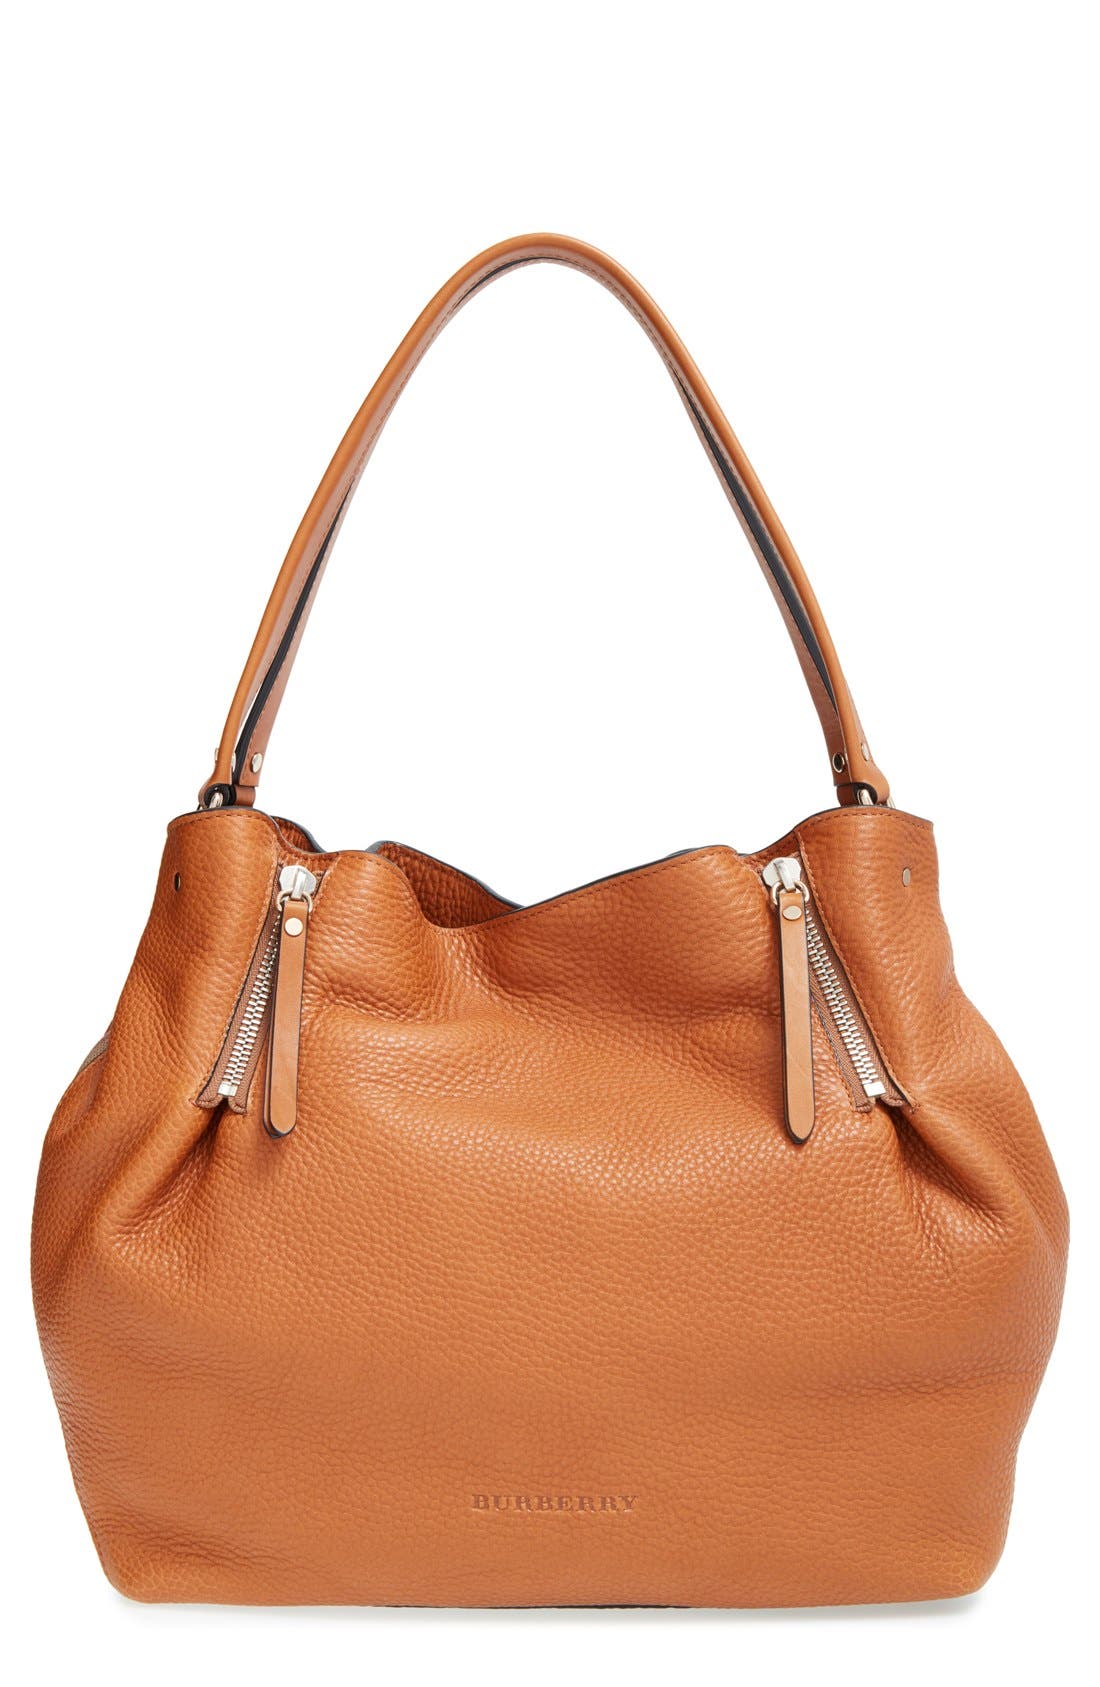 burberry leather handbag